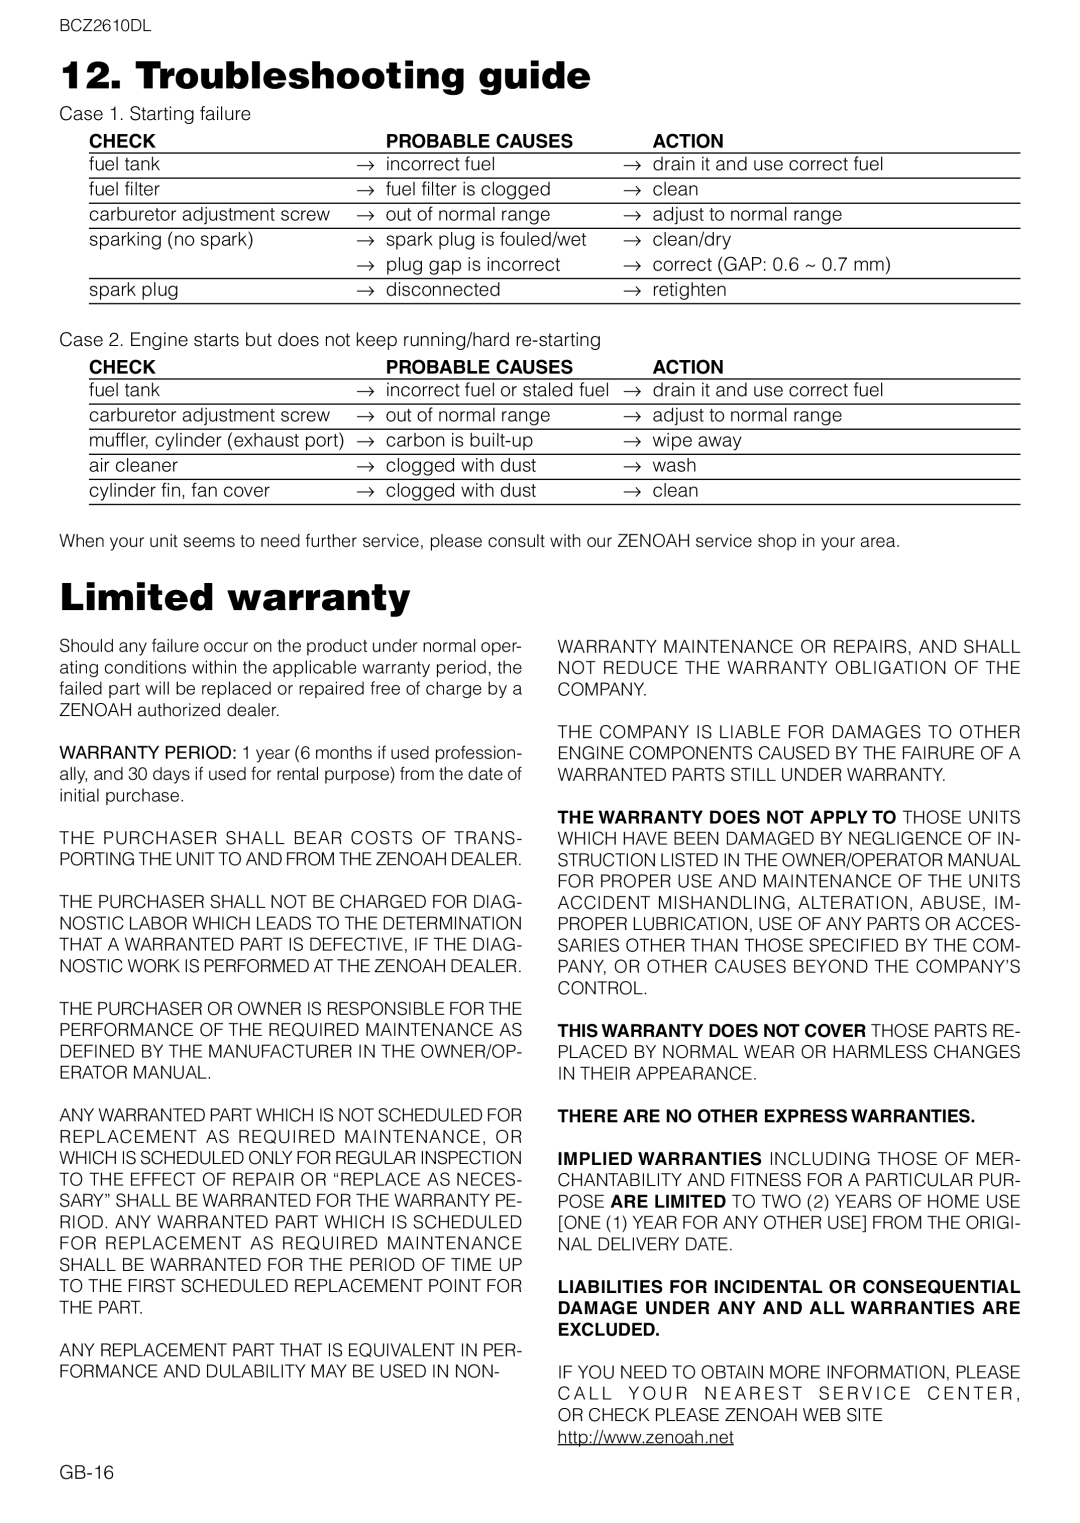 Zenoah BCZ2610DL owner manual Troubleshooting guide, Limited warranty 